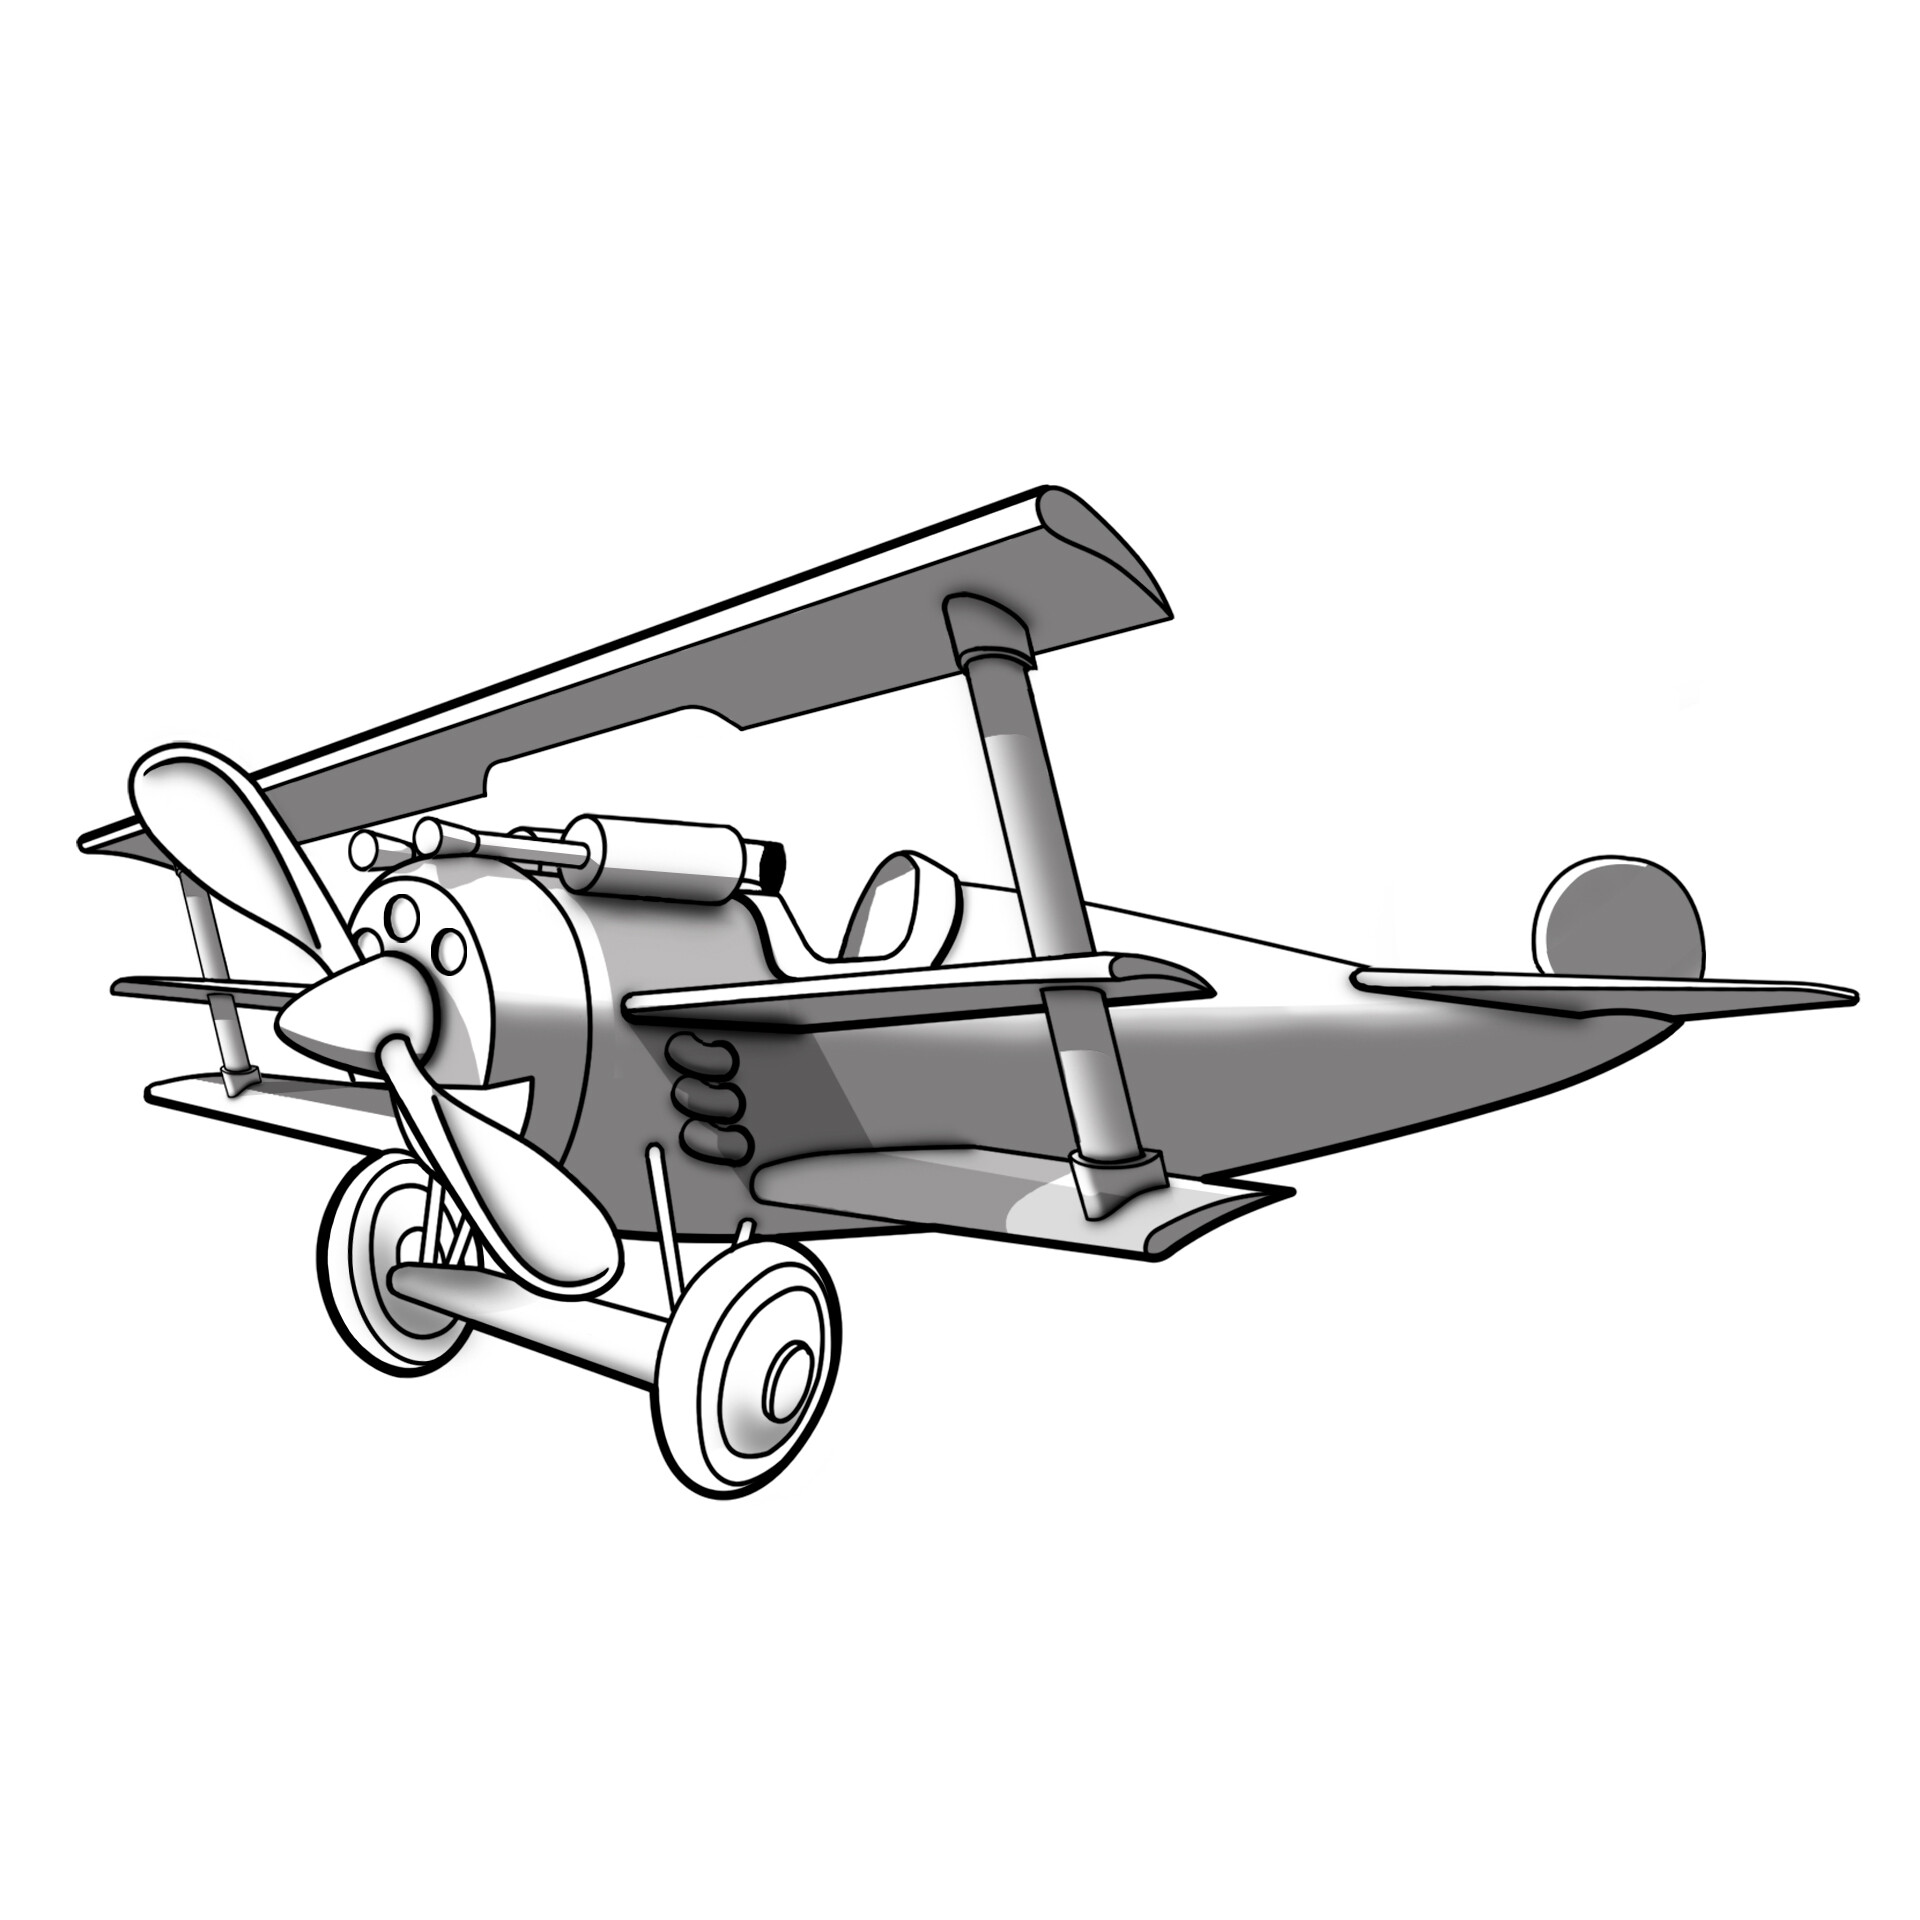 ArtStation - Vintage airplane, cartoon character design